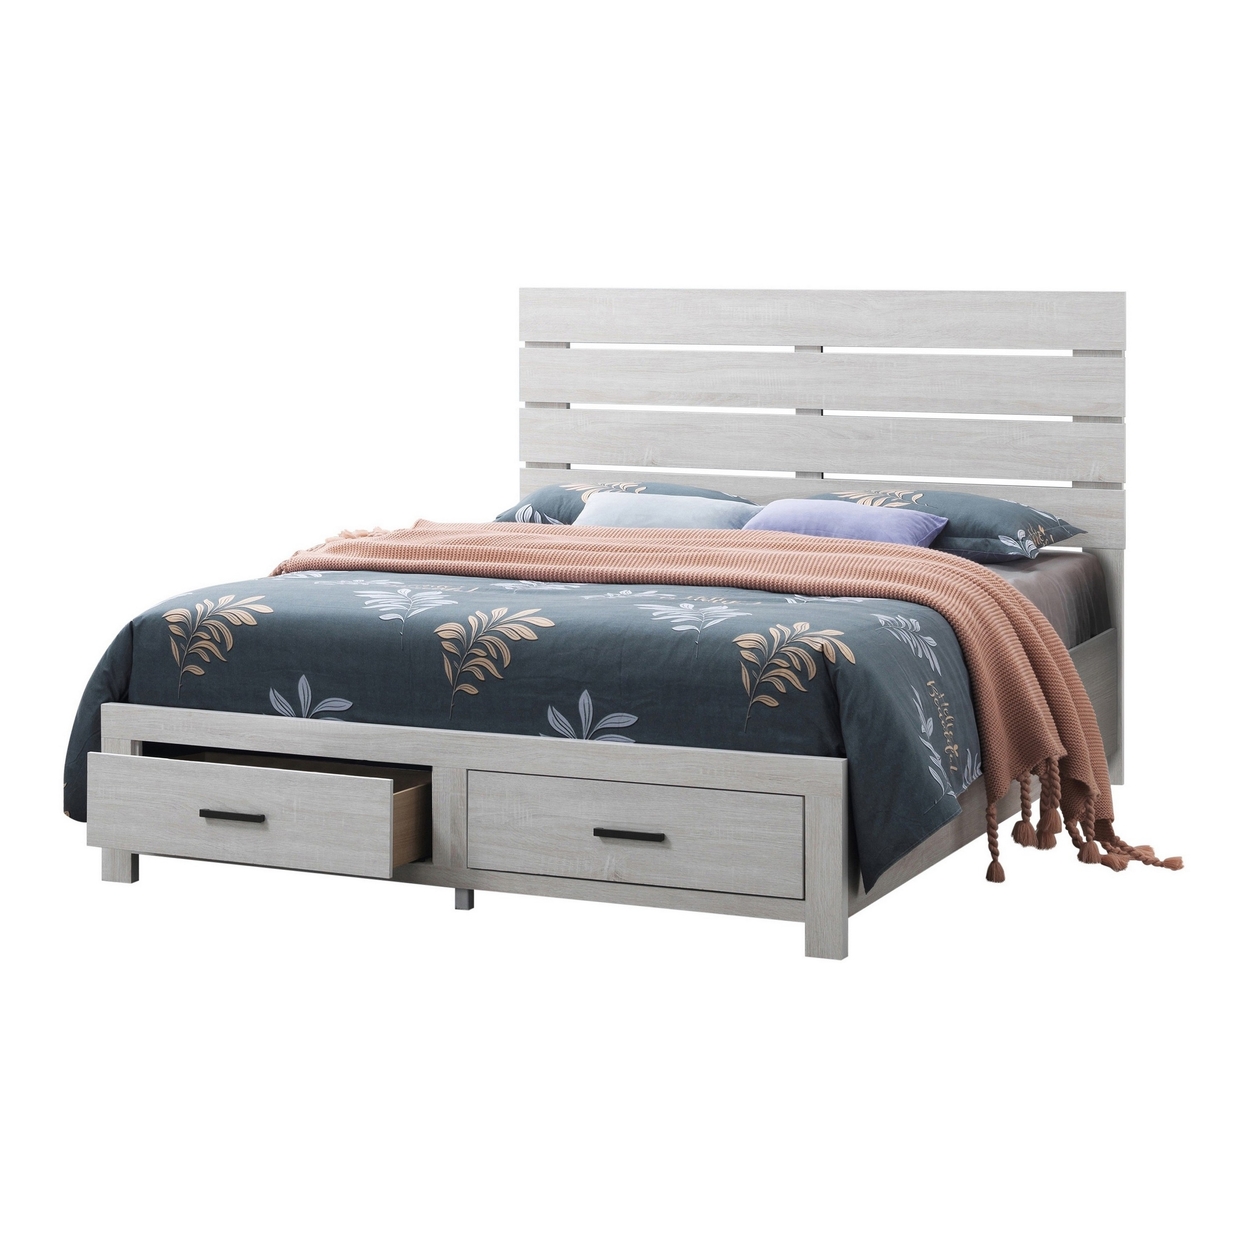 Ach Wood King Storage Bed With 2 Drawers, Plank Style Headboard, White- Saltoro Sherpi